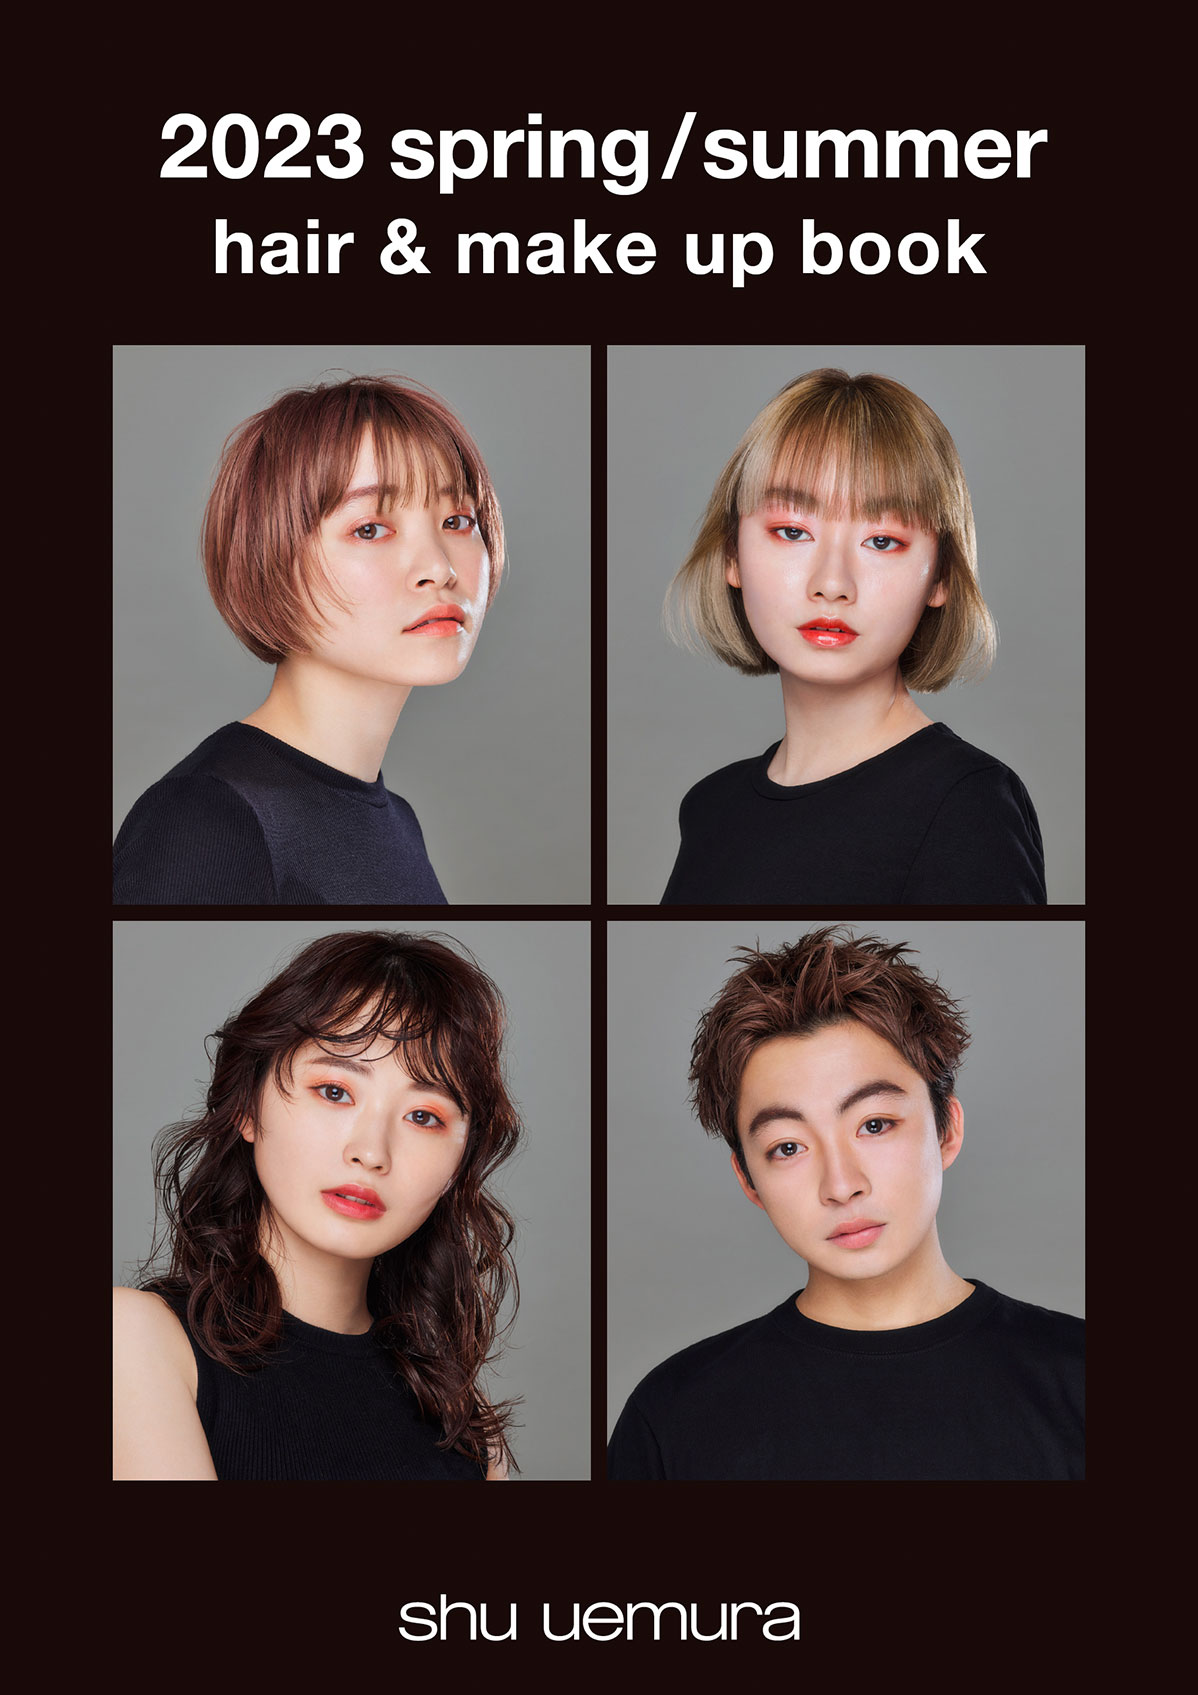 2023 spring/summer hair & make up book